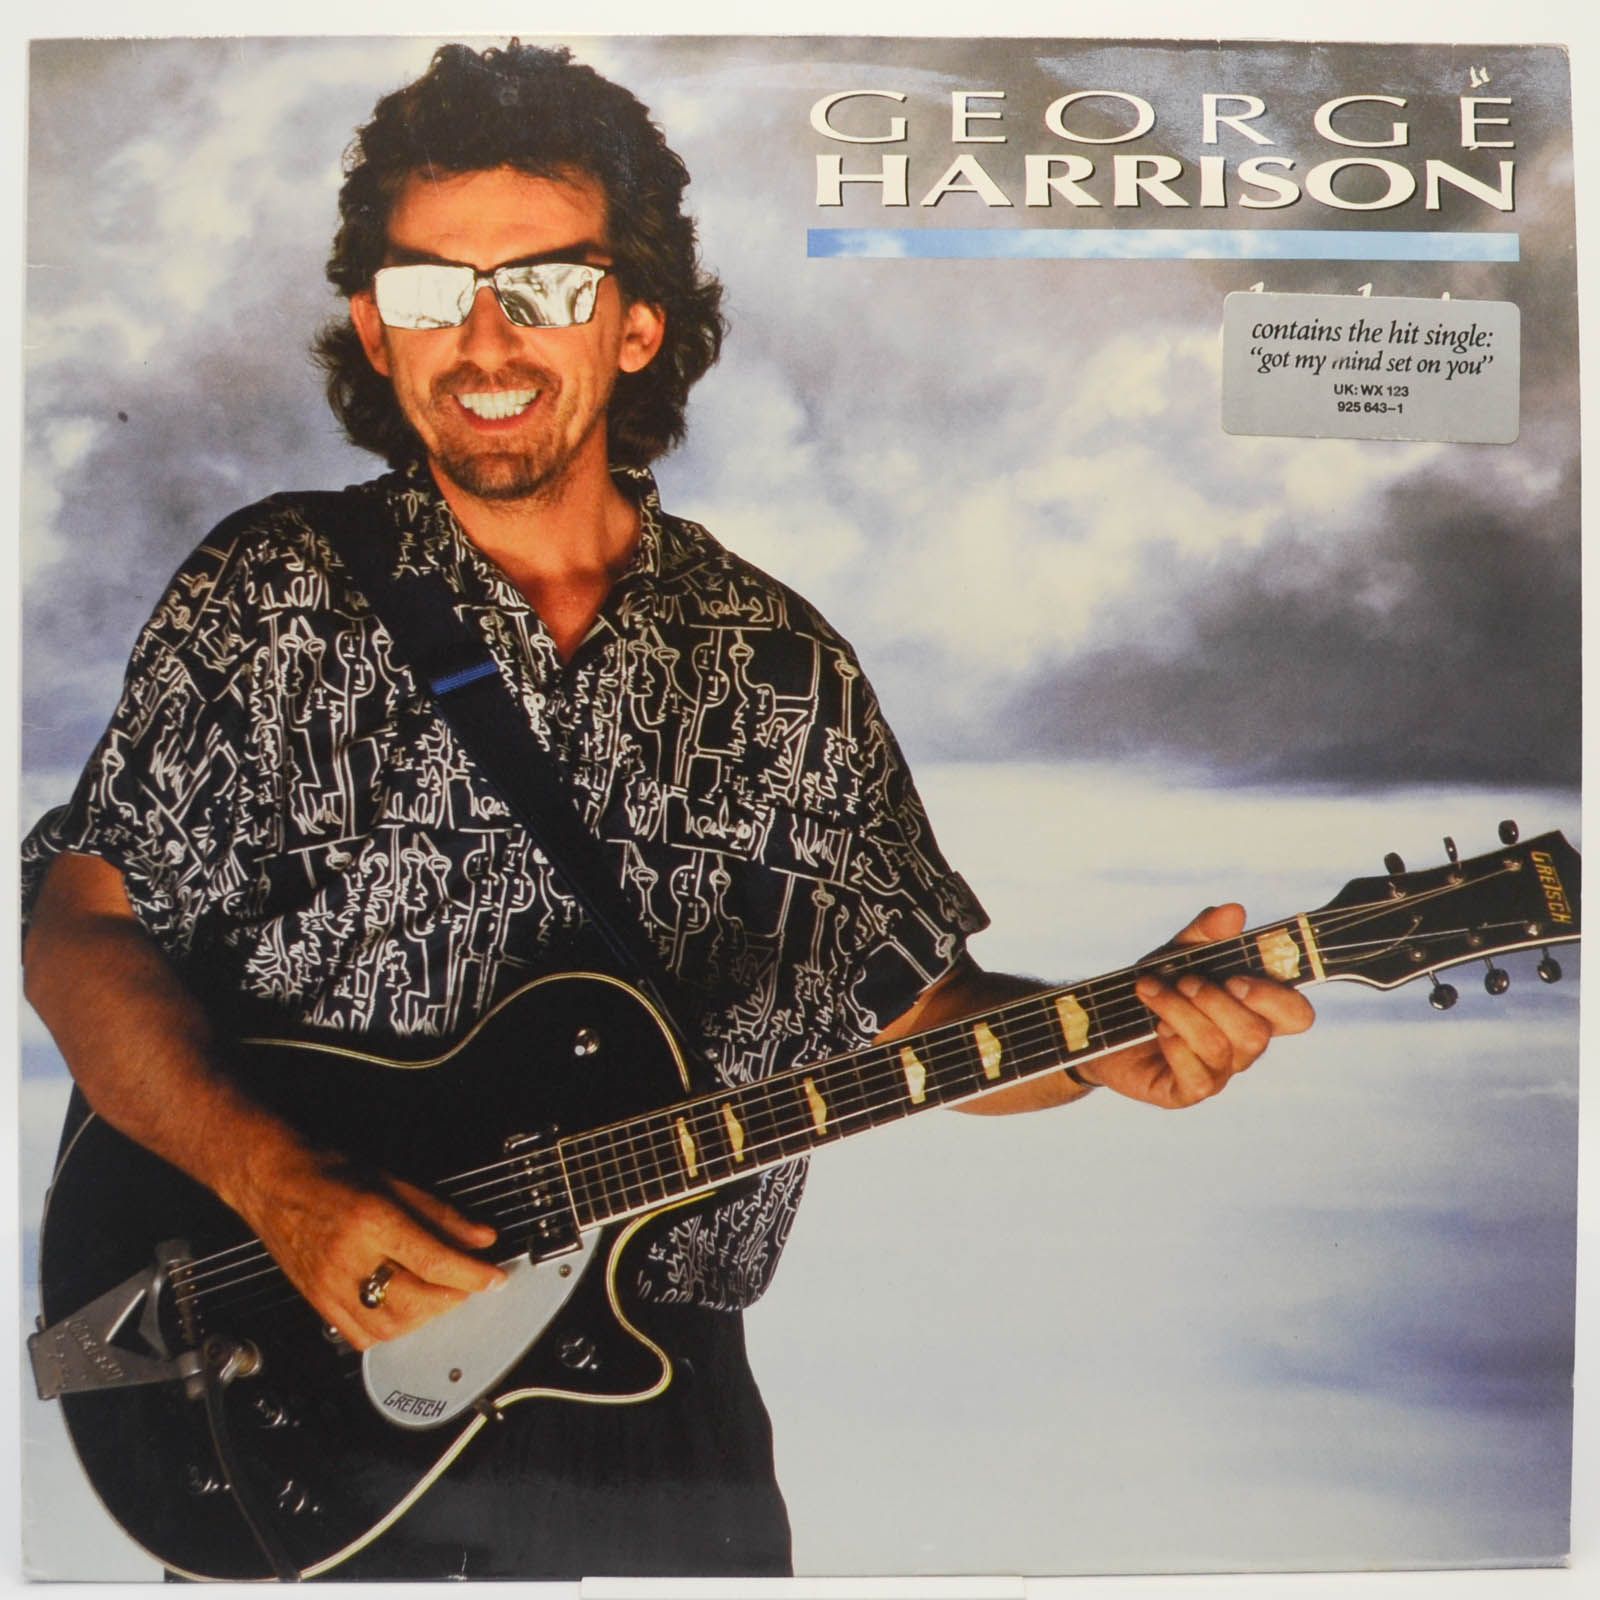 George Harrison — Cloud Nine, 1987